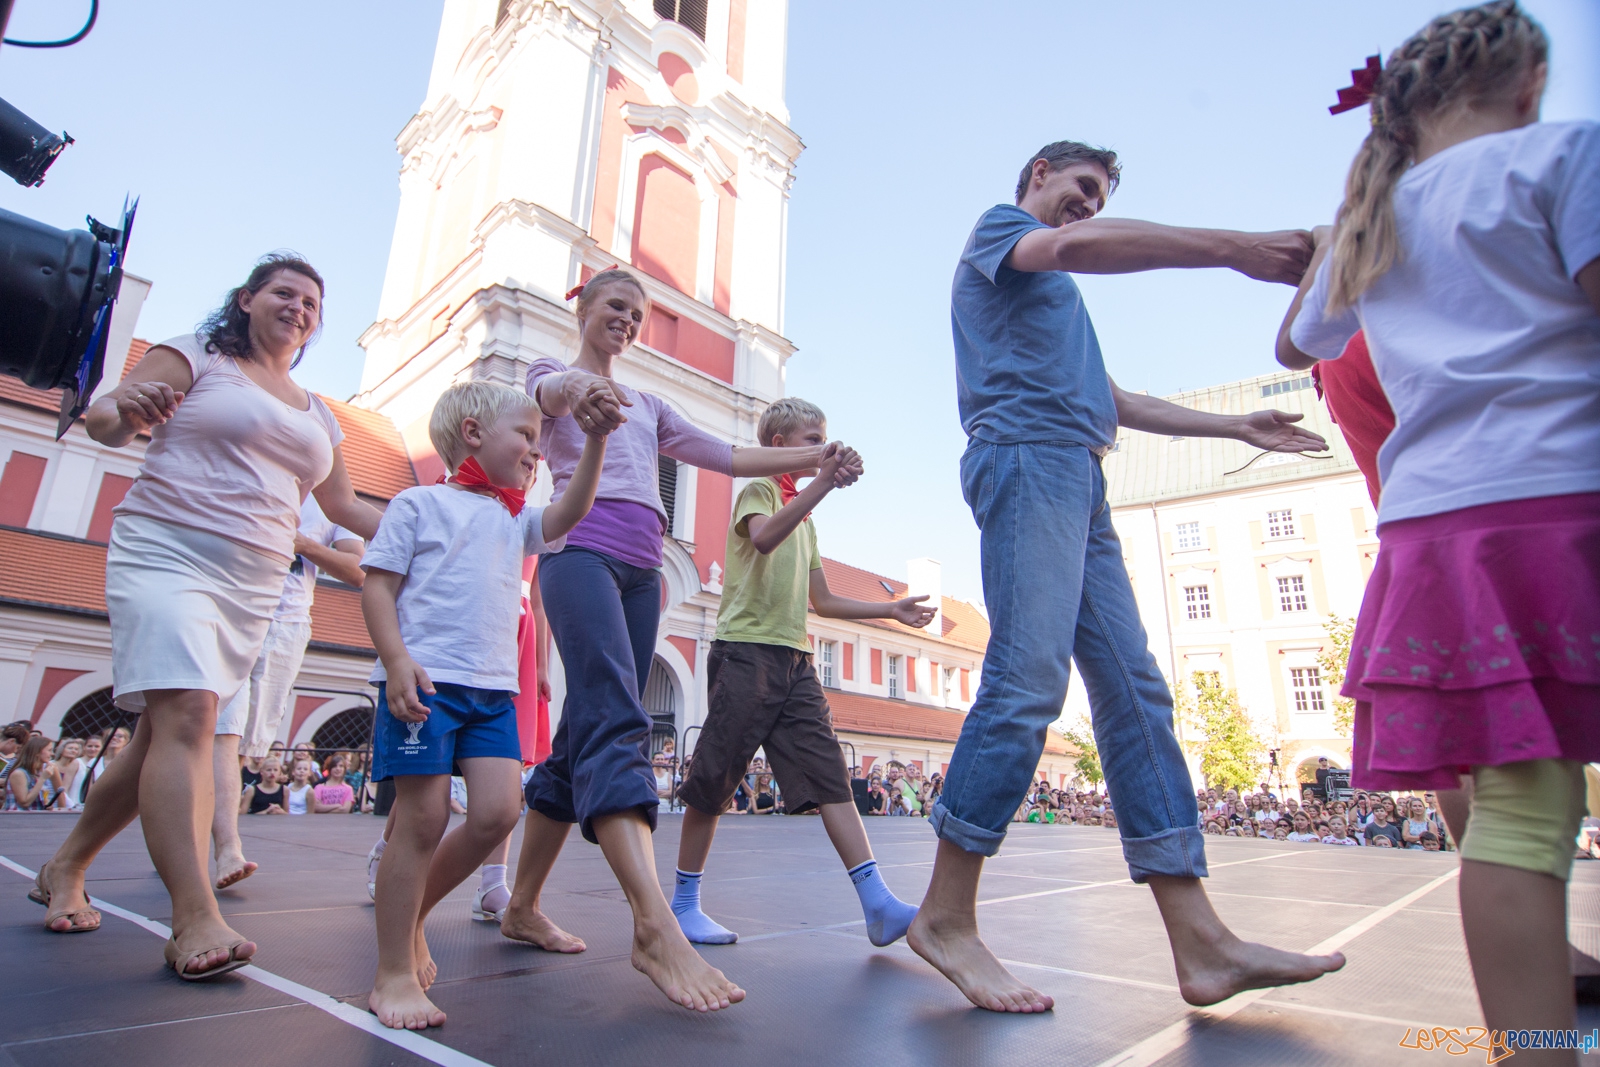 Dancing Poznan 2015  Foto: lepszyPOZNAN.pl / Piotr Rychter